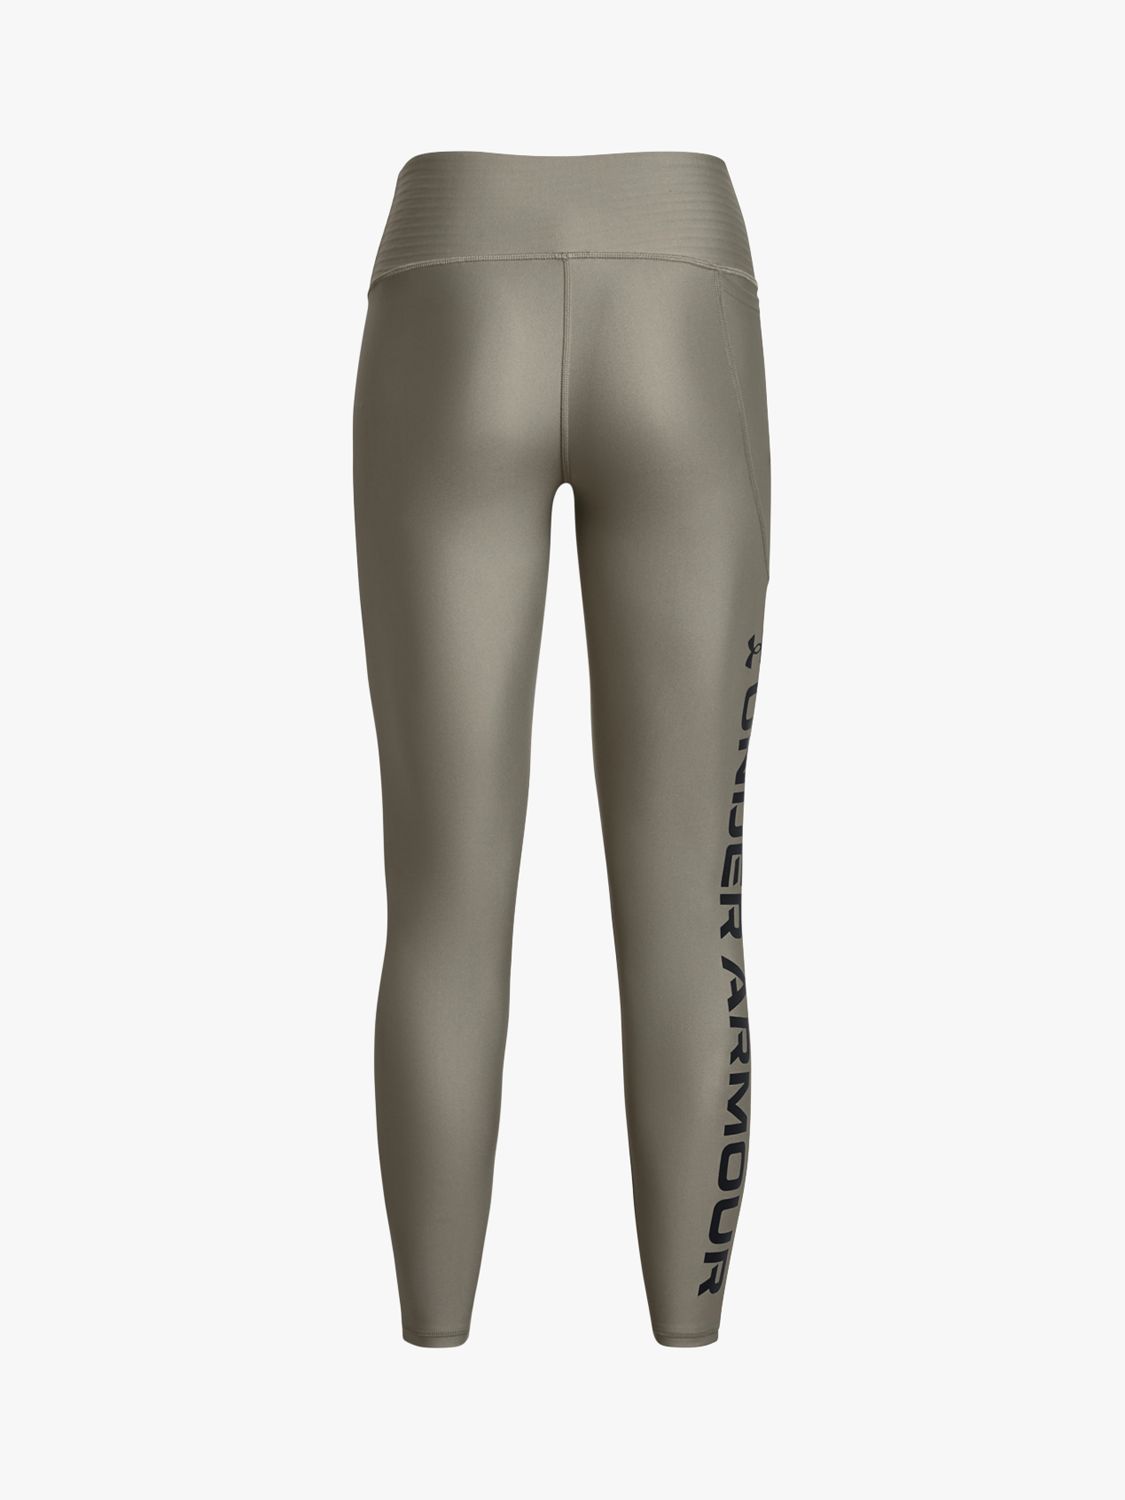 Buy Under Armour womens heatgear printed capri leggings teal black Online